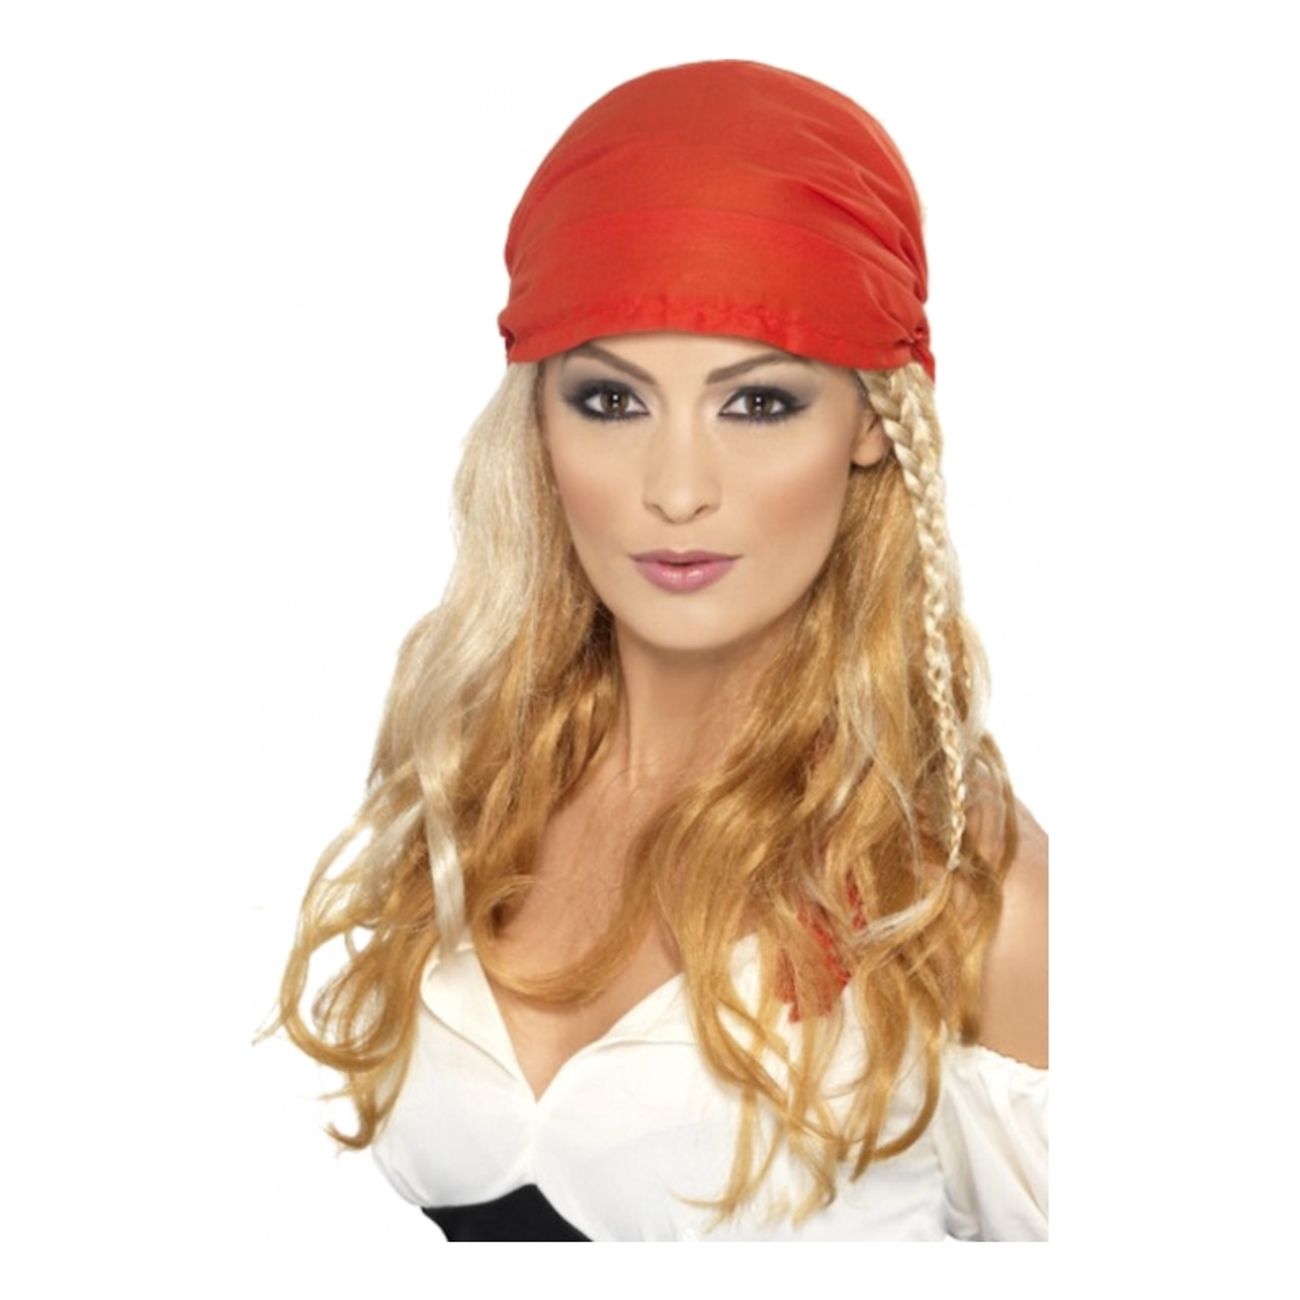 blonde-pirate-wig-with-bandana-1